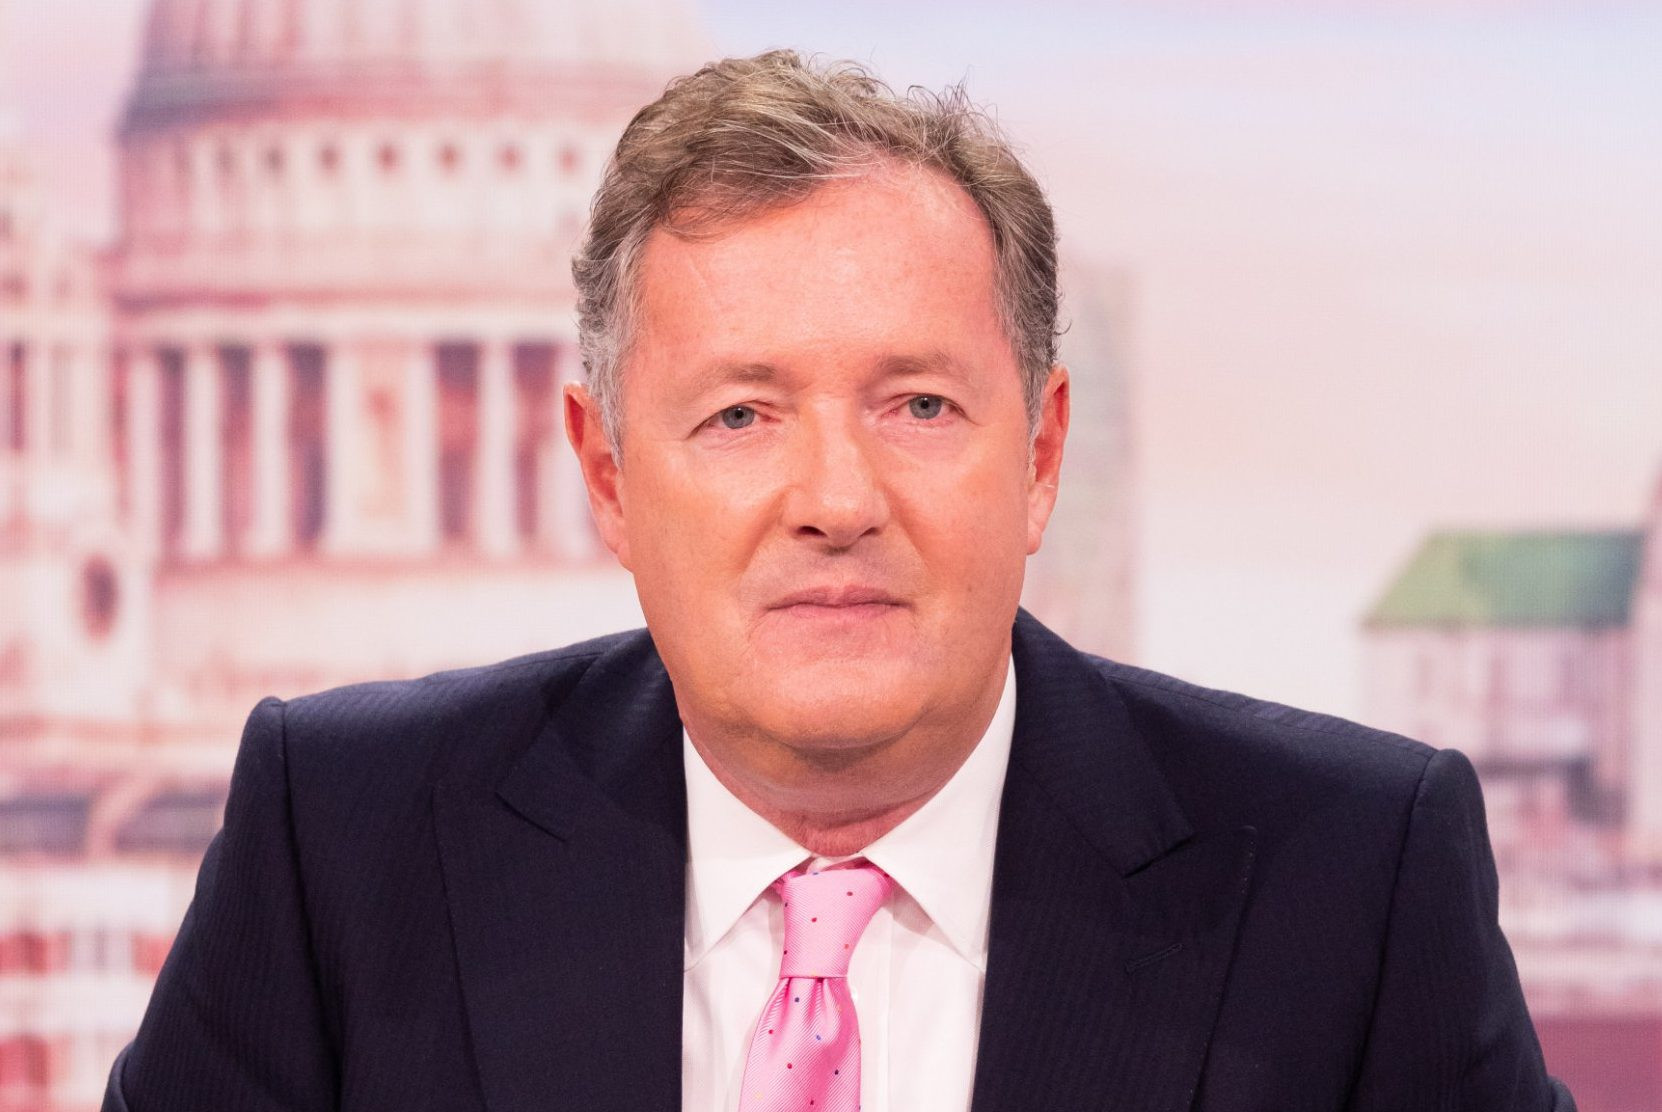 Piers Morgan teases TV comeback amid ‘interesting conversations’ after sharp Good Morning Britain exit